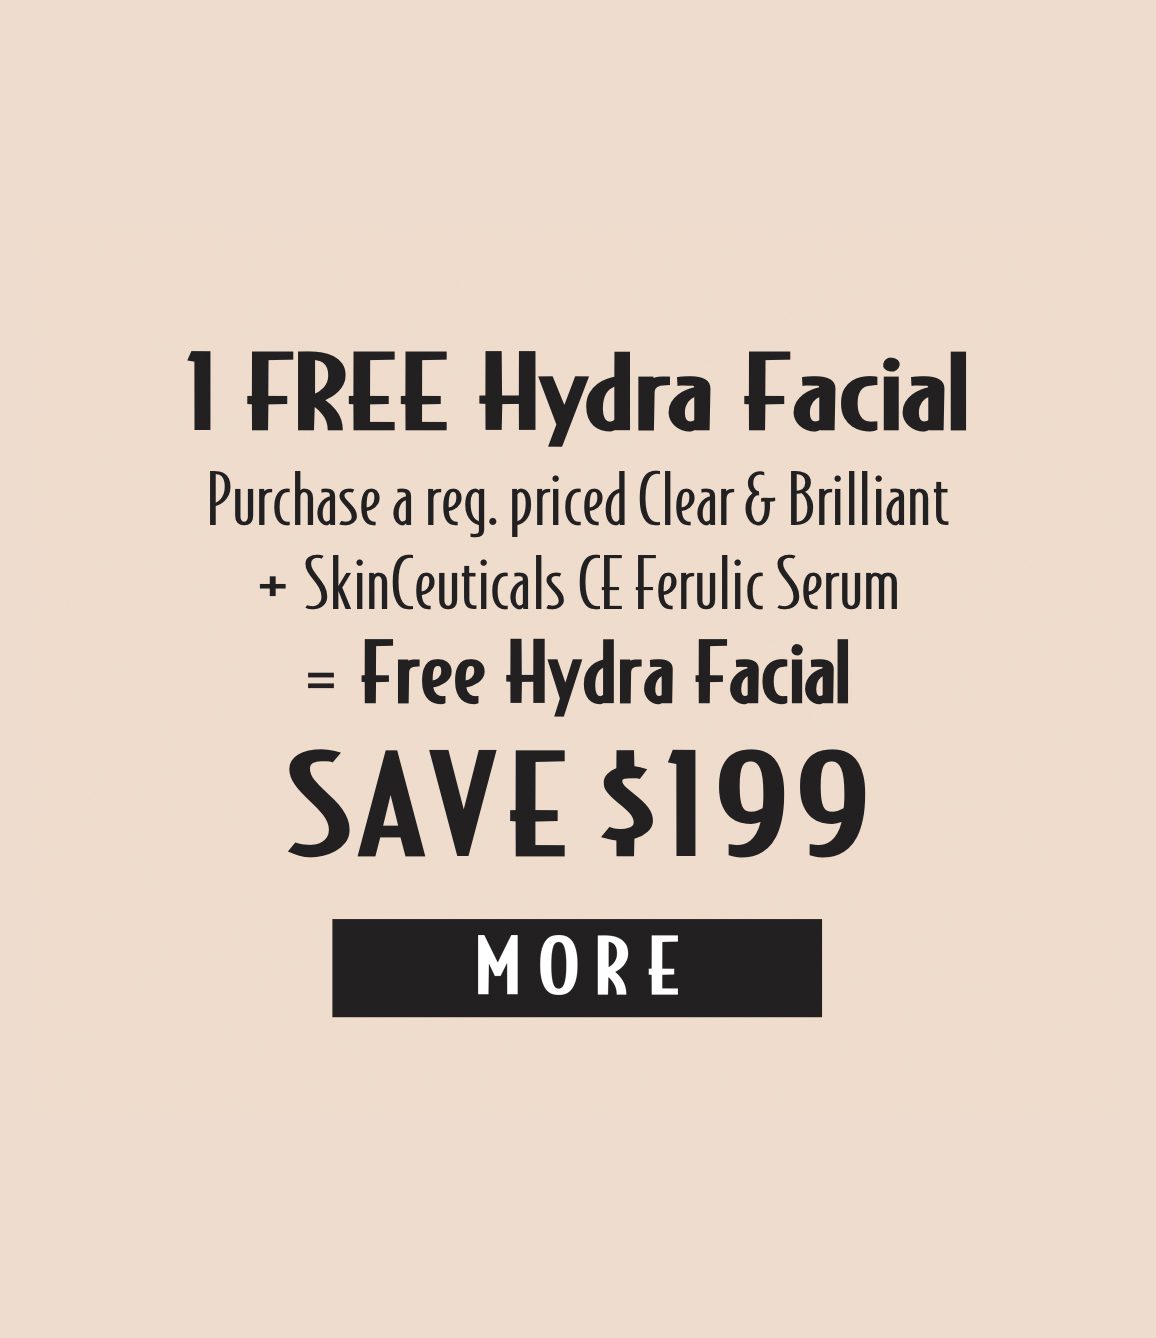 FREE Hydra Facial - Save $199